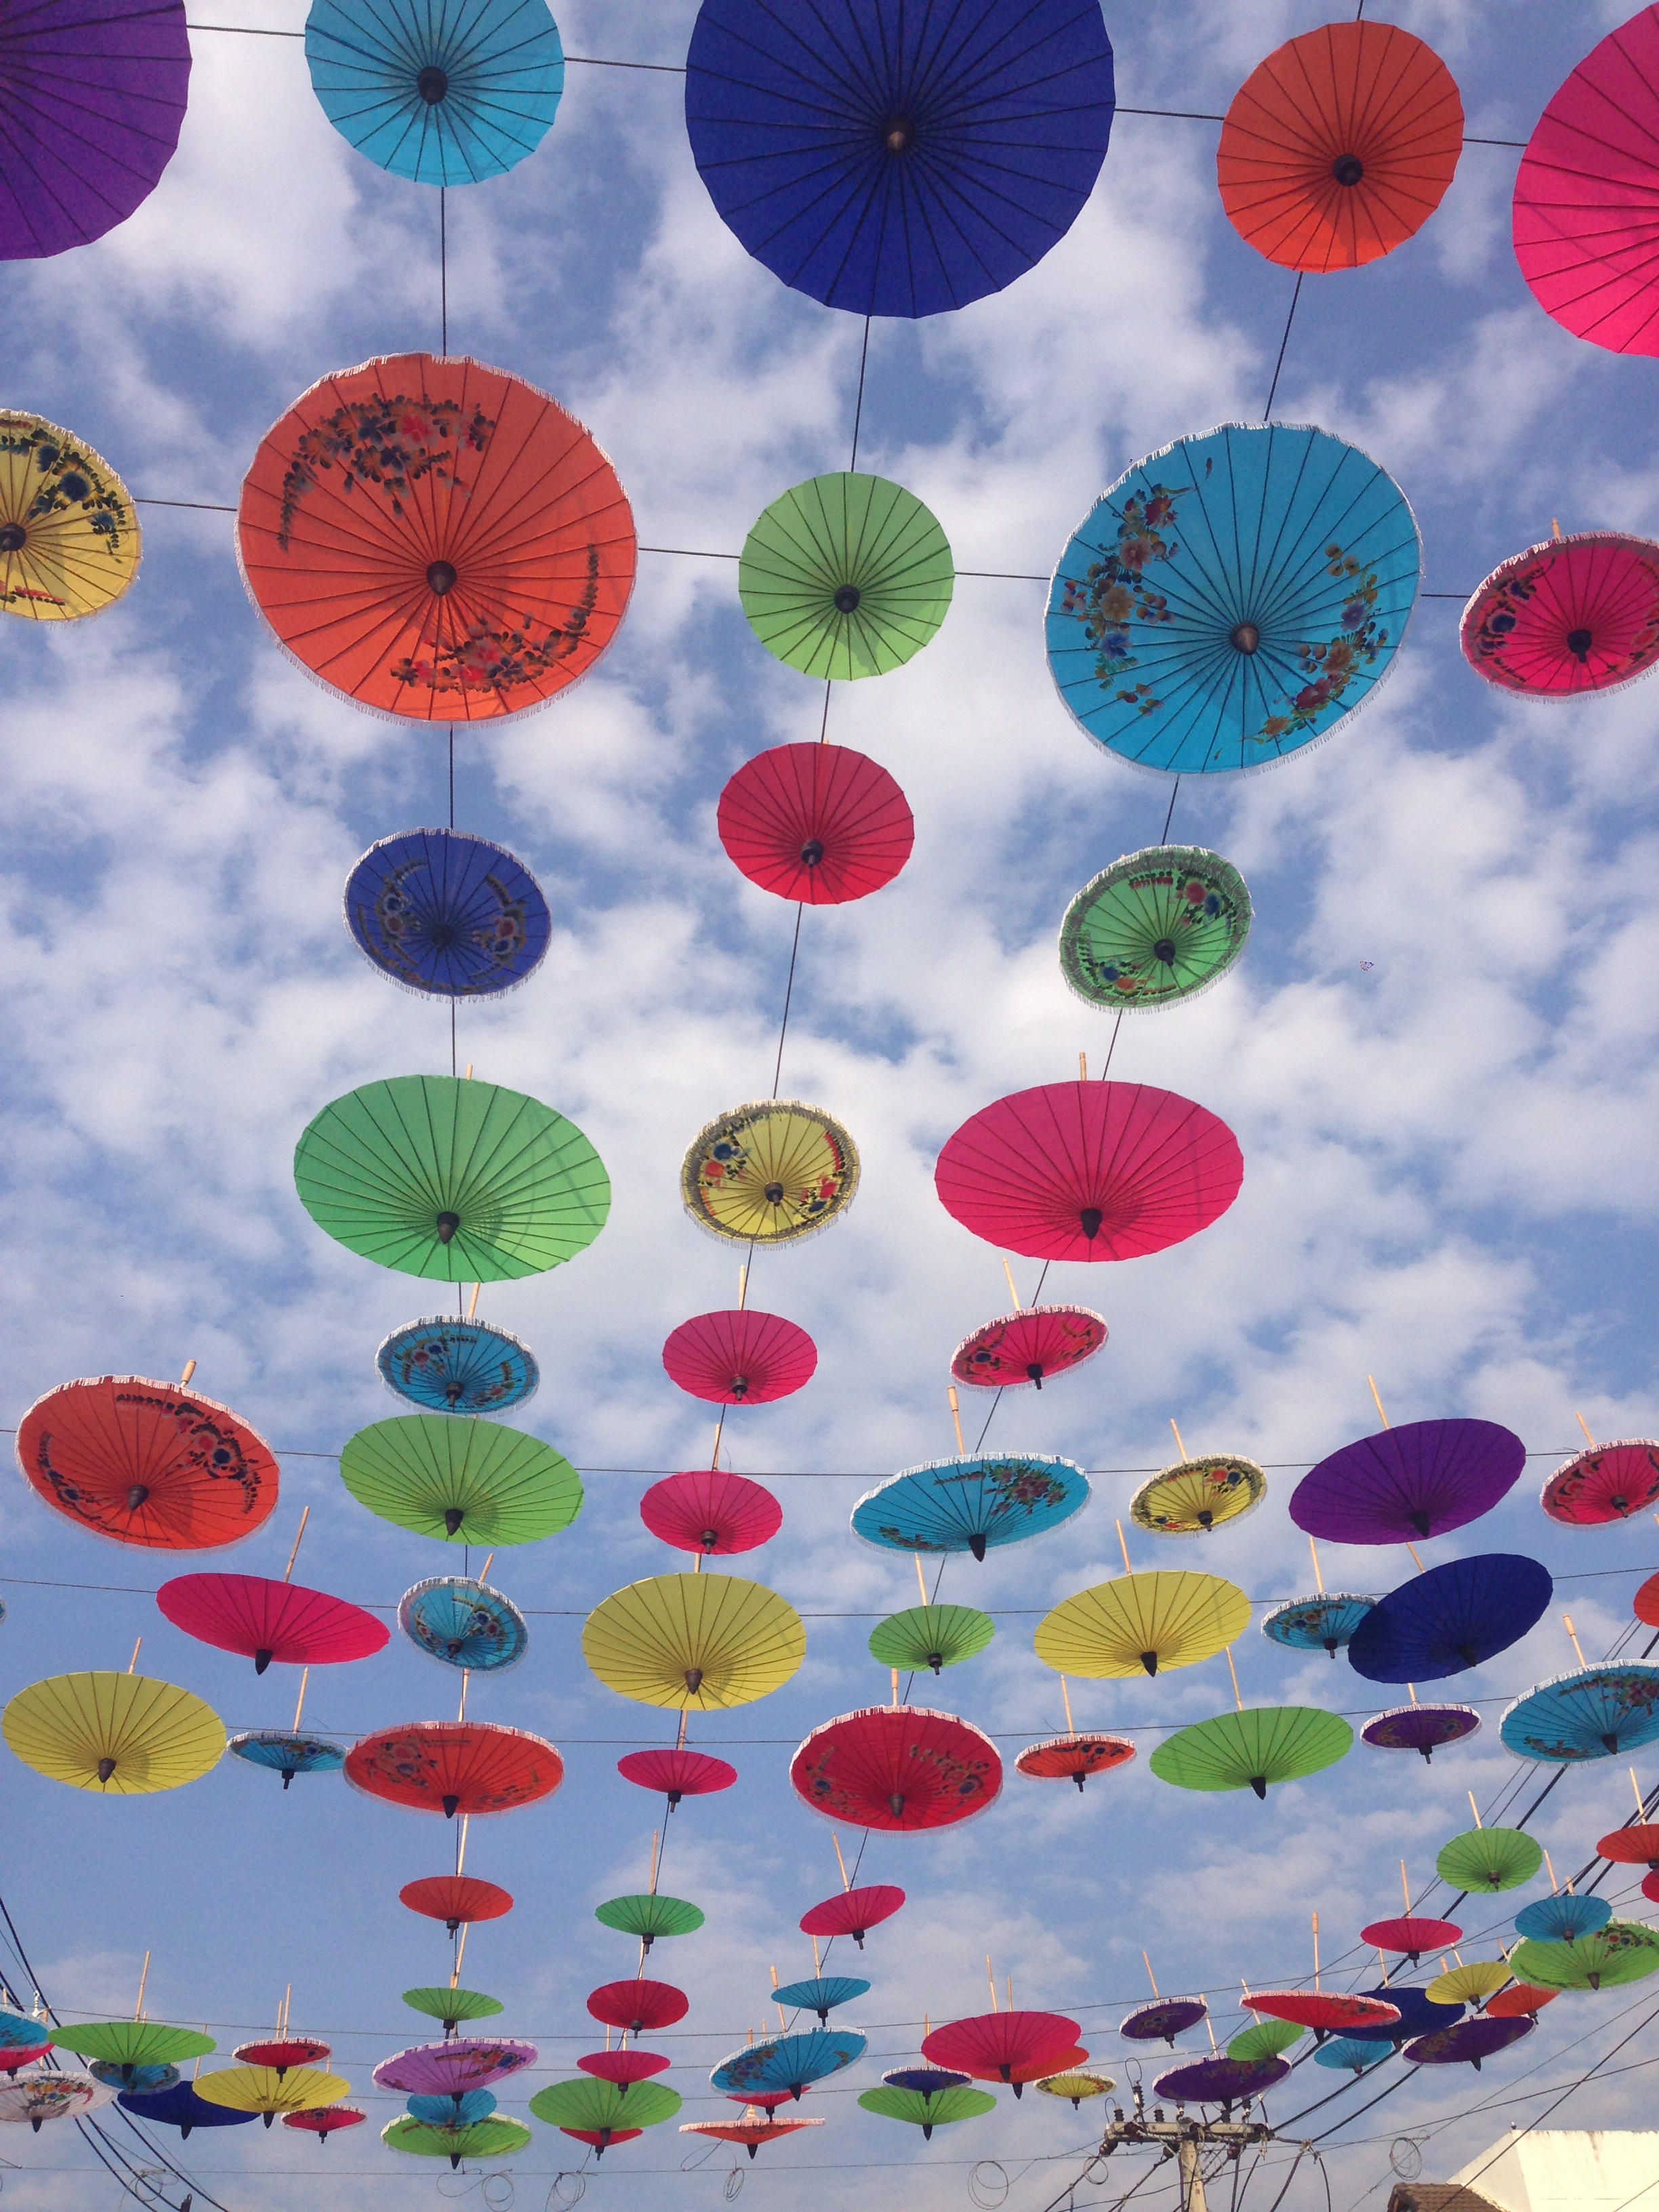 Tag 10: Umbrella Festival